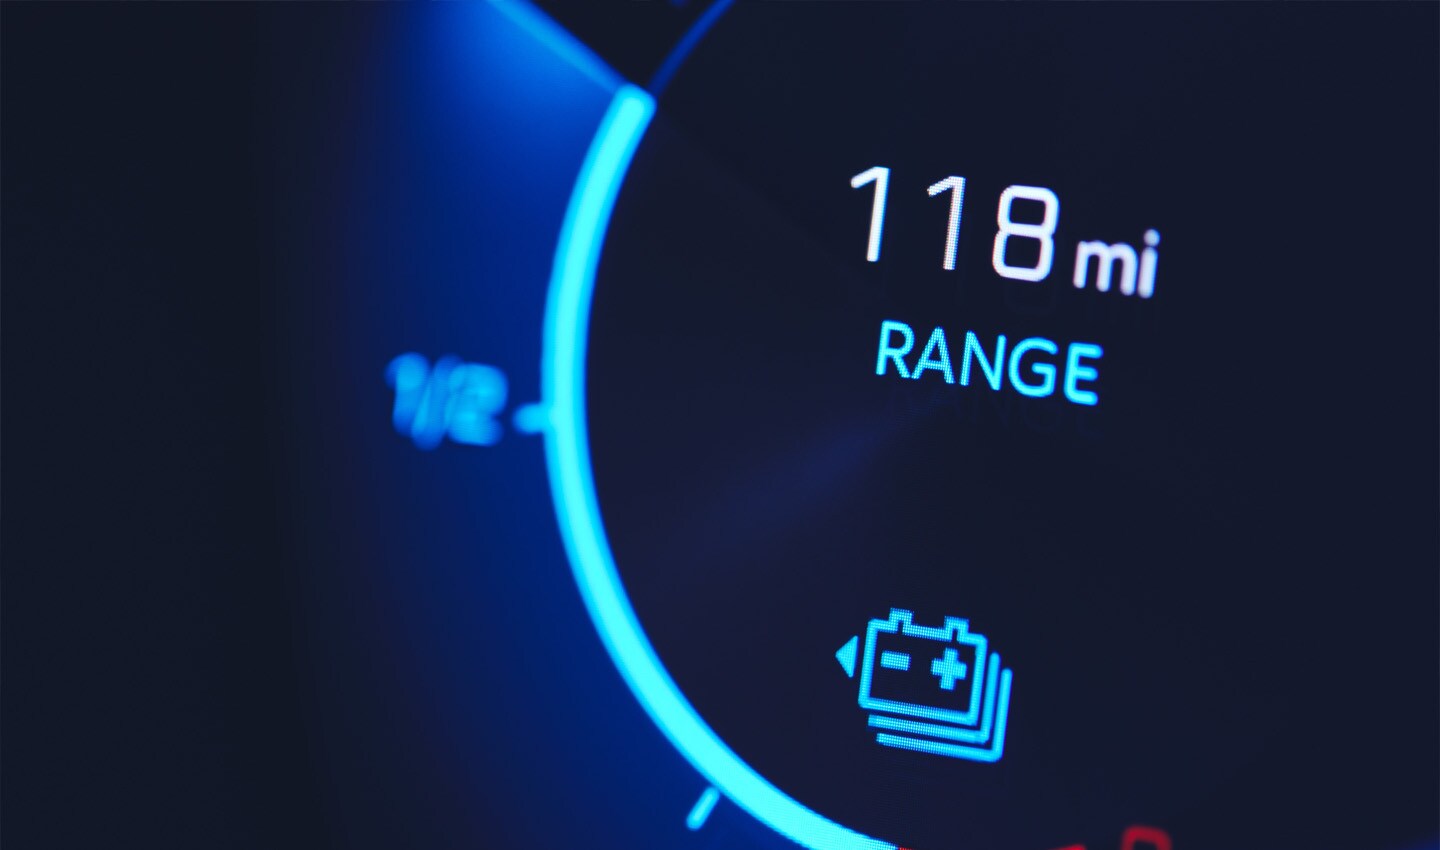 84% of EV automakers are focused on increasing EV range.